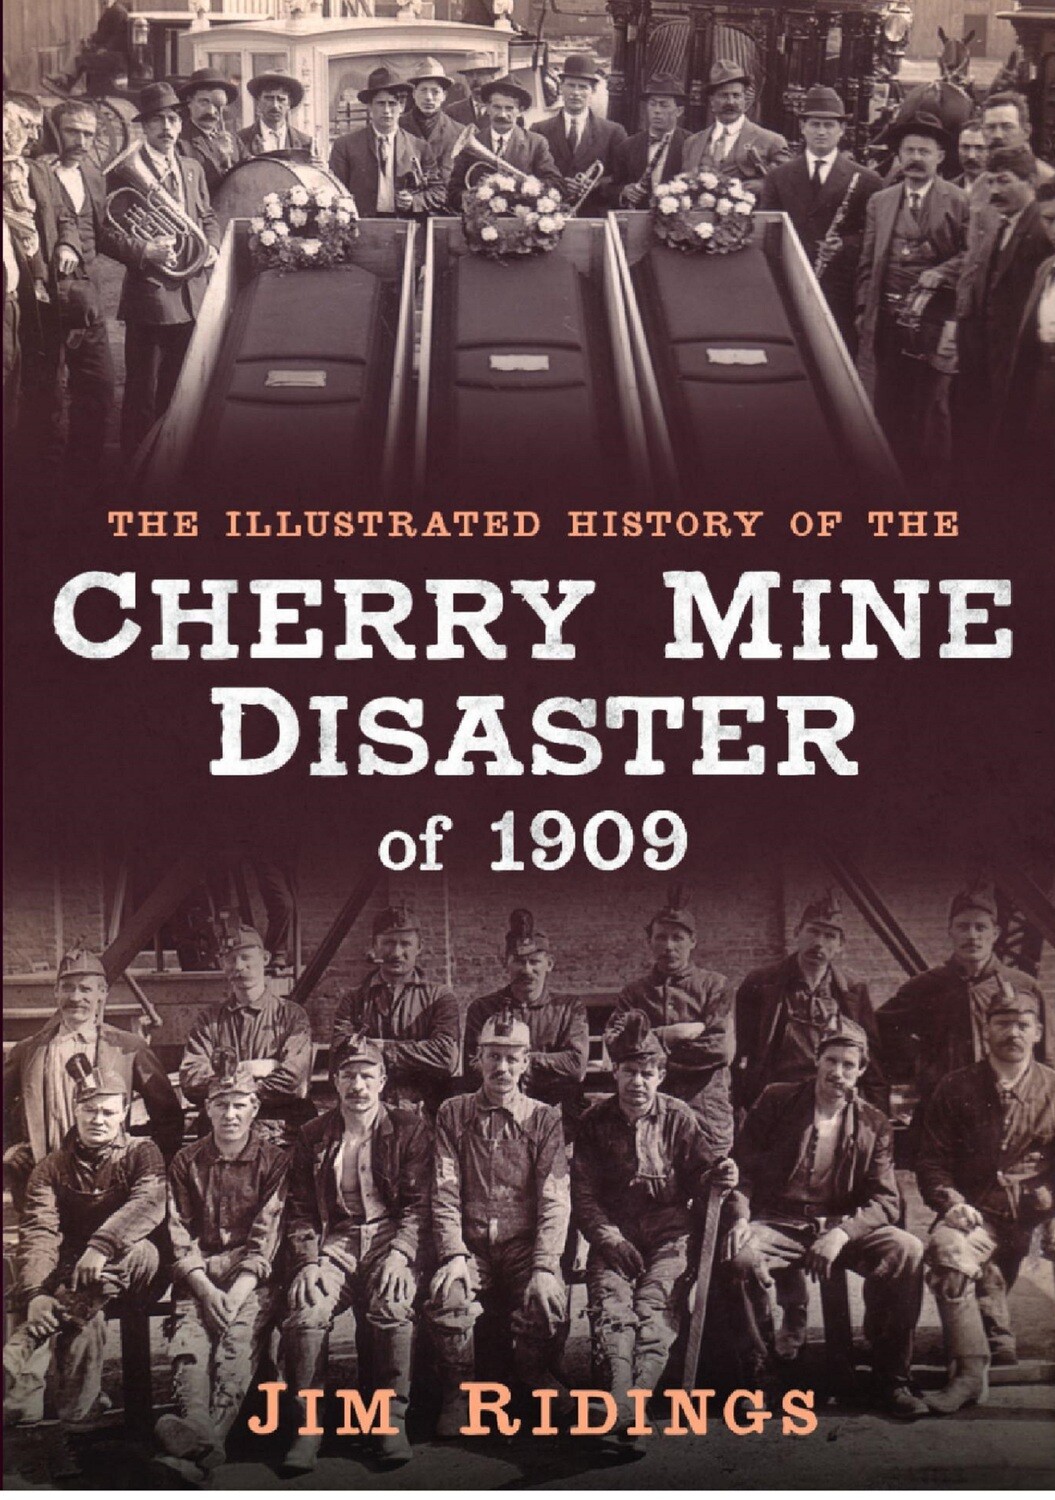 Cherry Mine Disaster of 1909